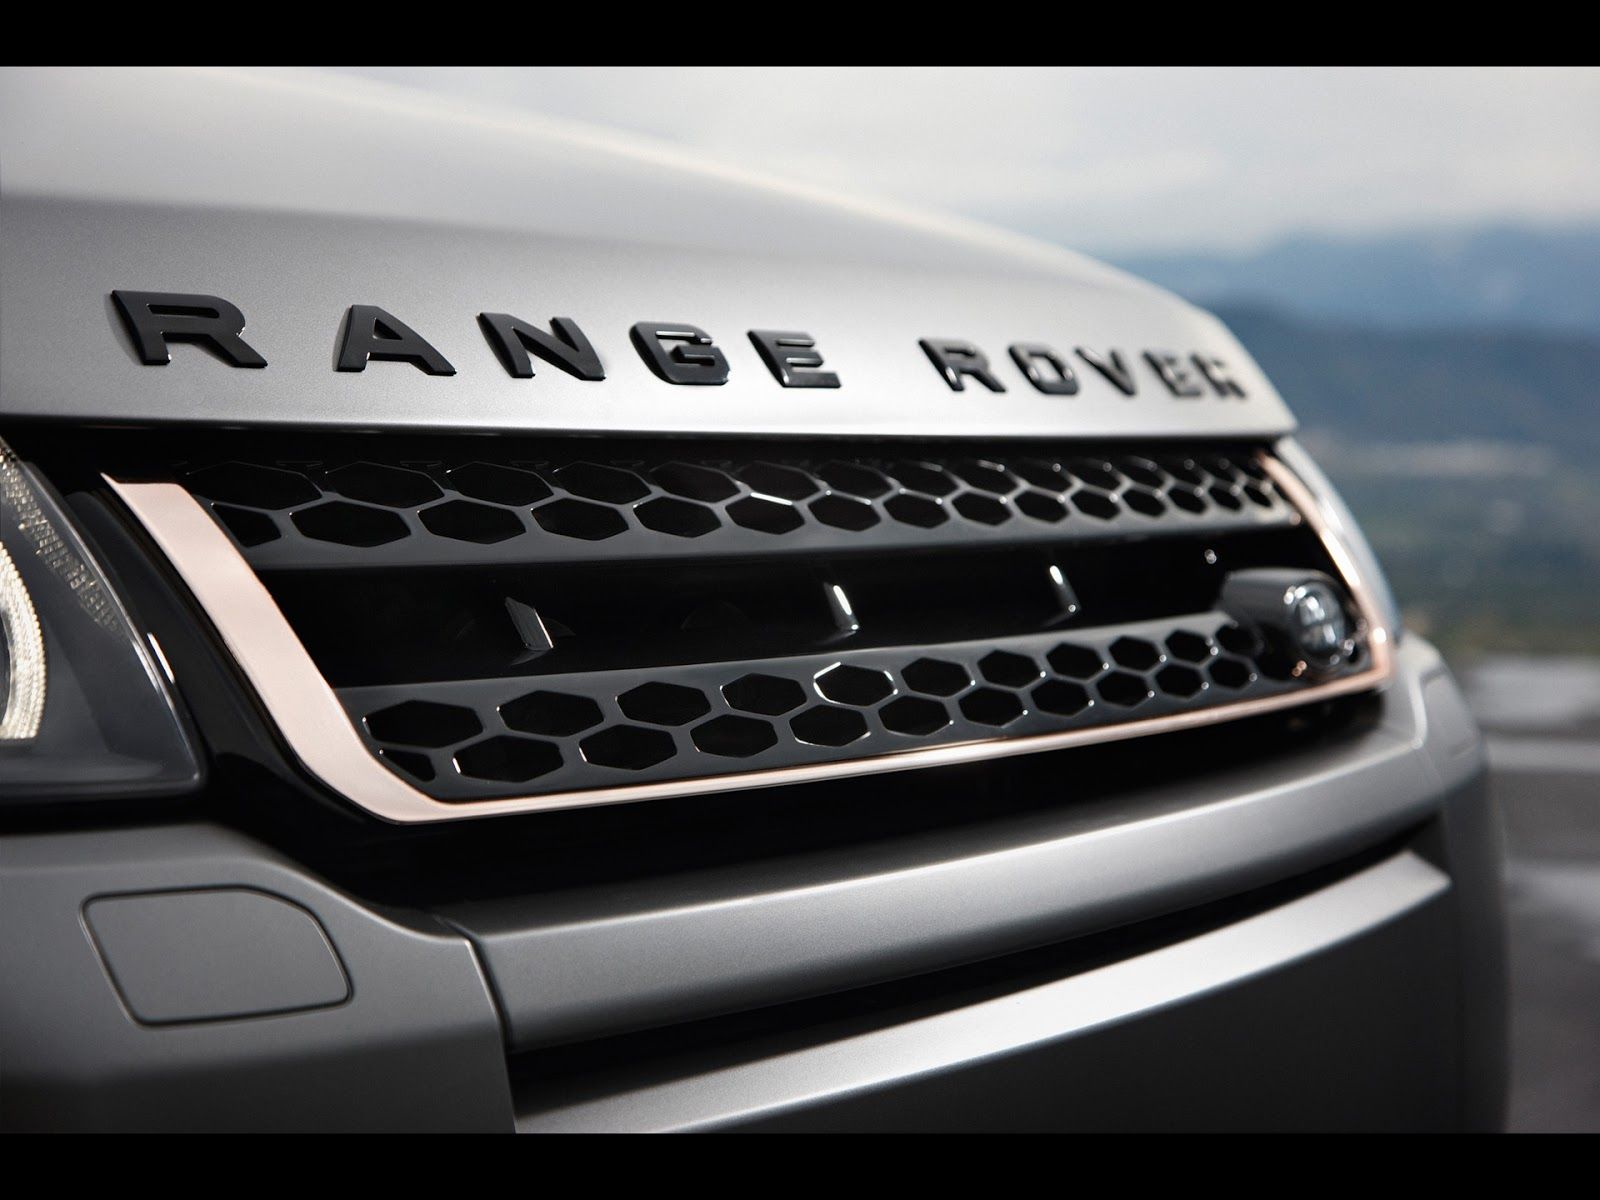 HD Range Rover Wallpaper & Range Rover Background Image For Download